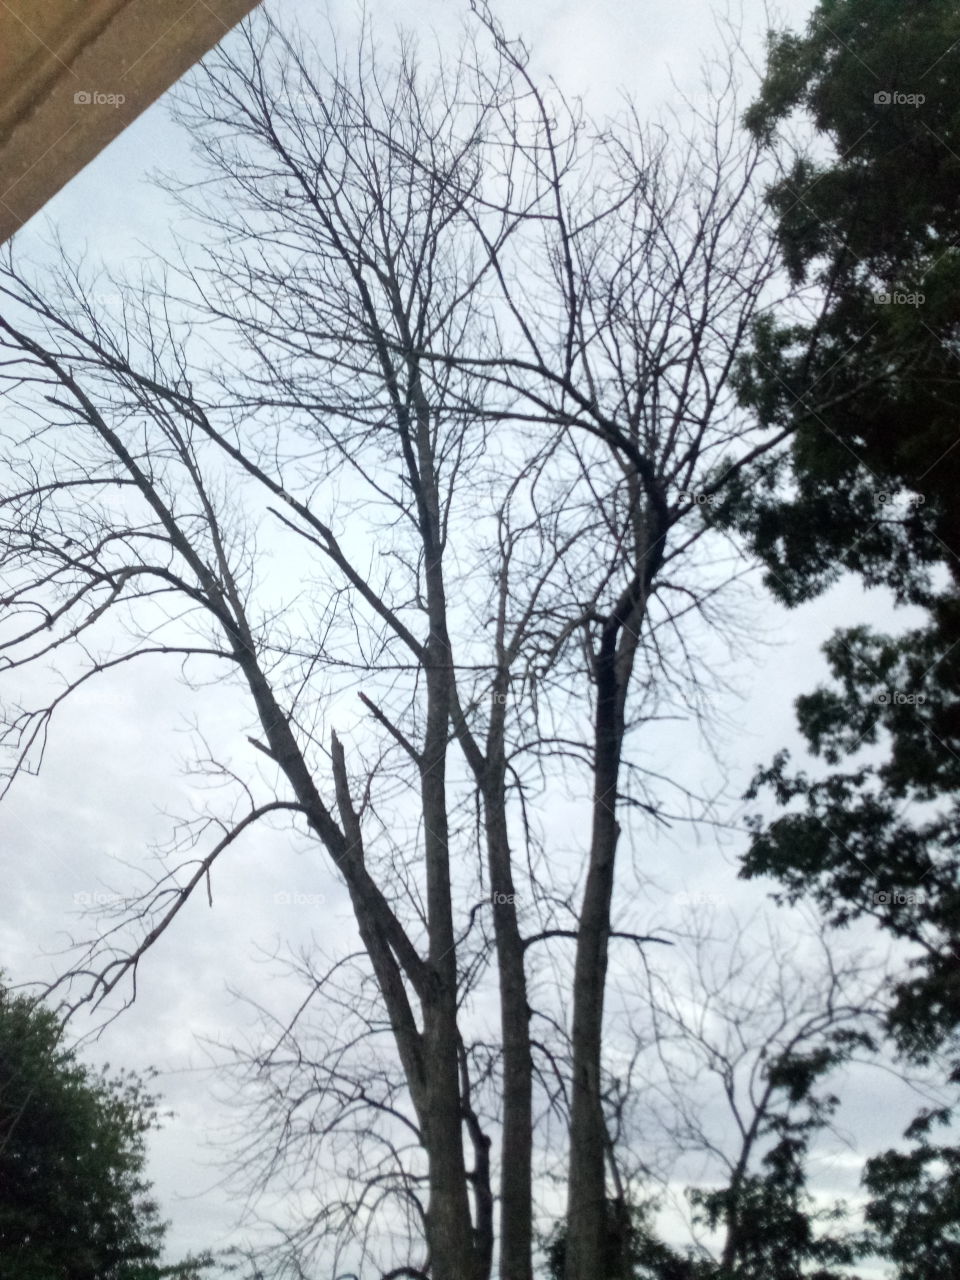 I call this tree skeletor